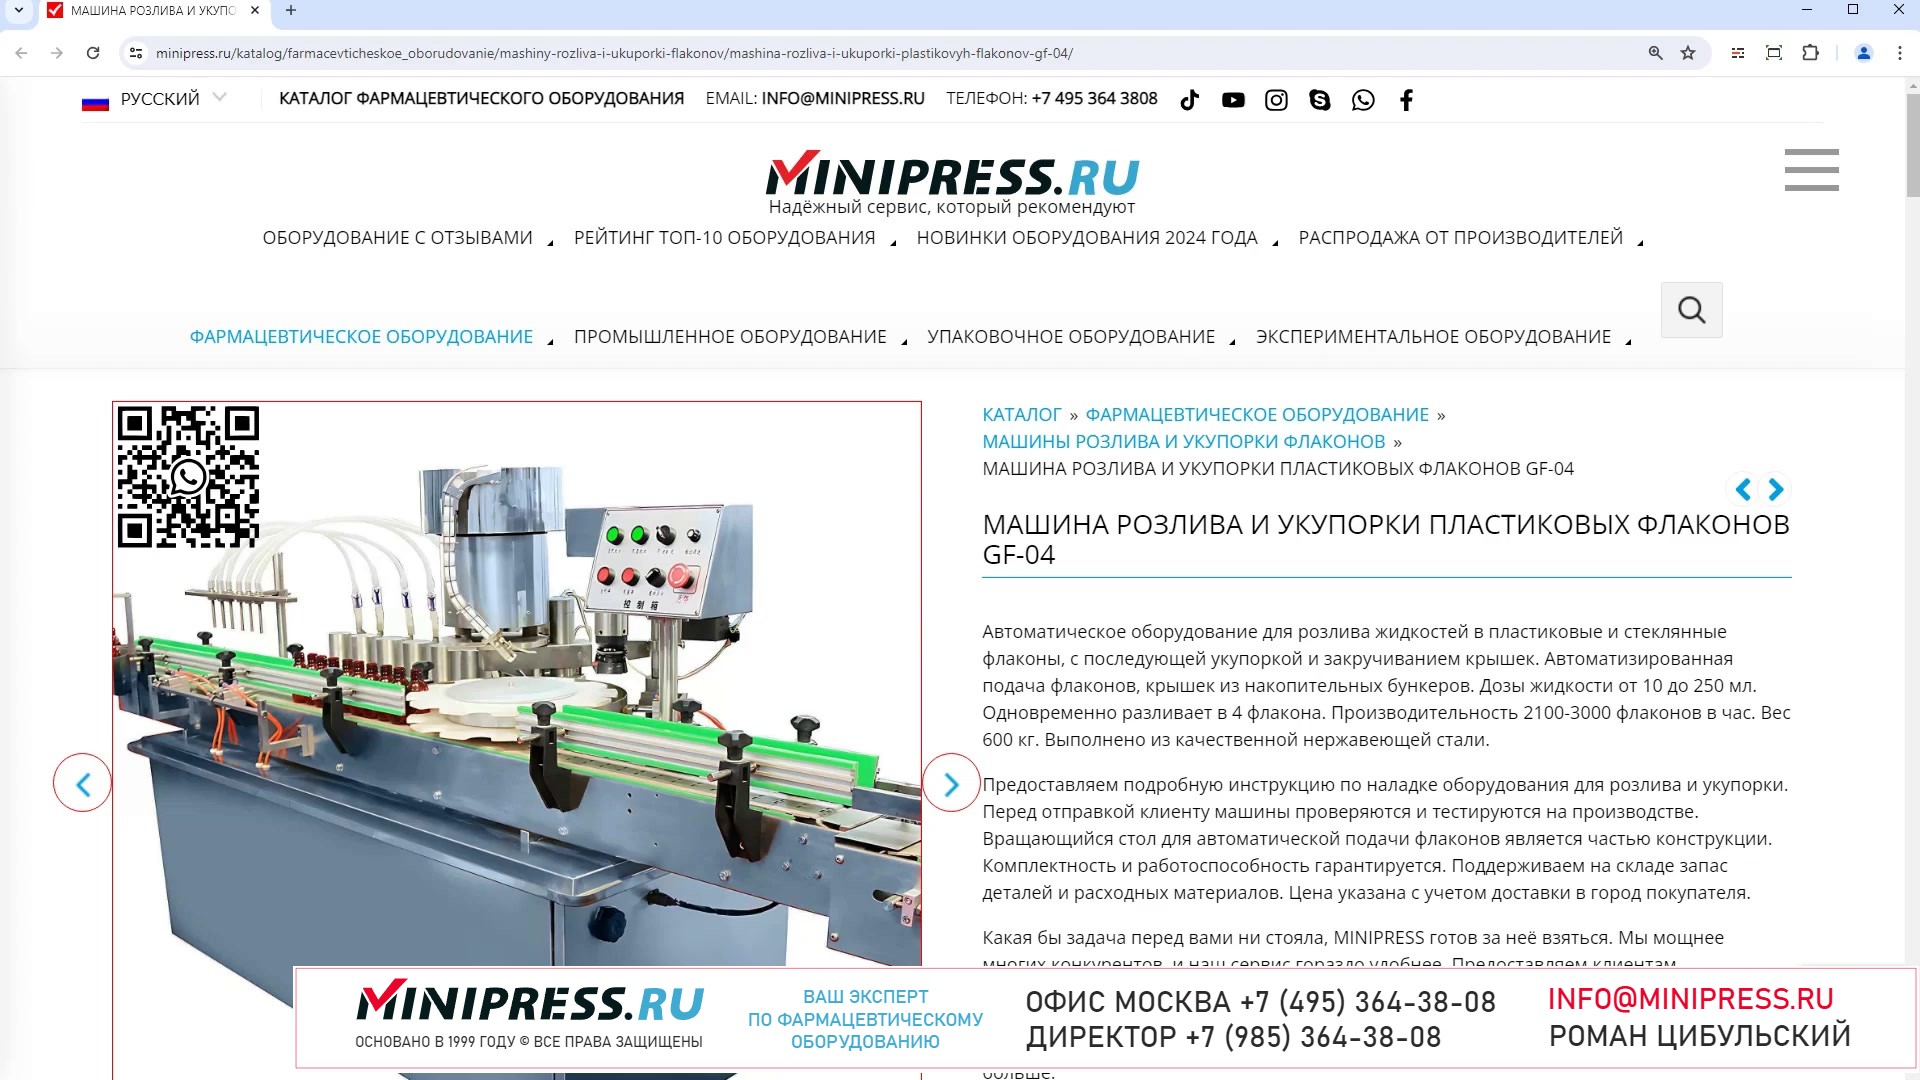 Minipress.ru Машина розлива и укупорки пластиковых флаконов GF-04